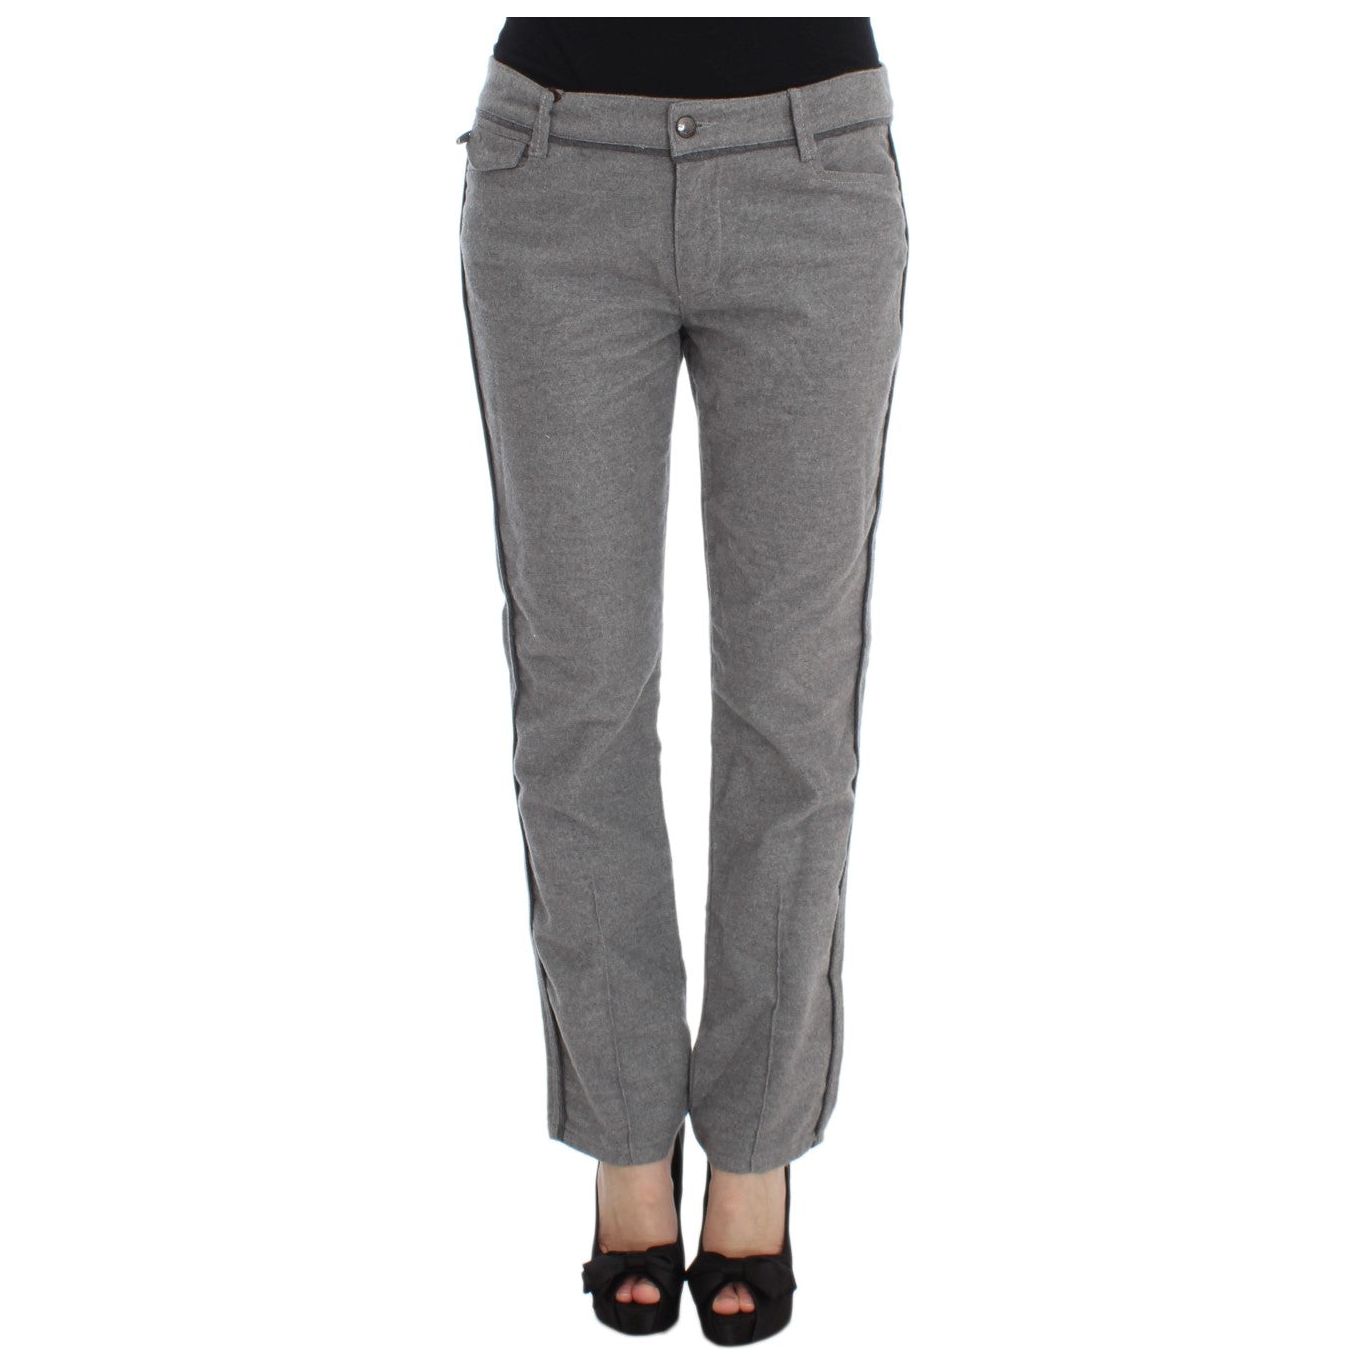 Ermanno Scervino Chic Gray Casual Cotton Pants gray-cotton-straight-fit-casual-pants 330370-gray-cotton-straight-fit-casual-pants.jpg